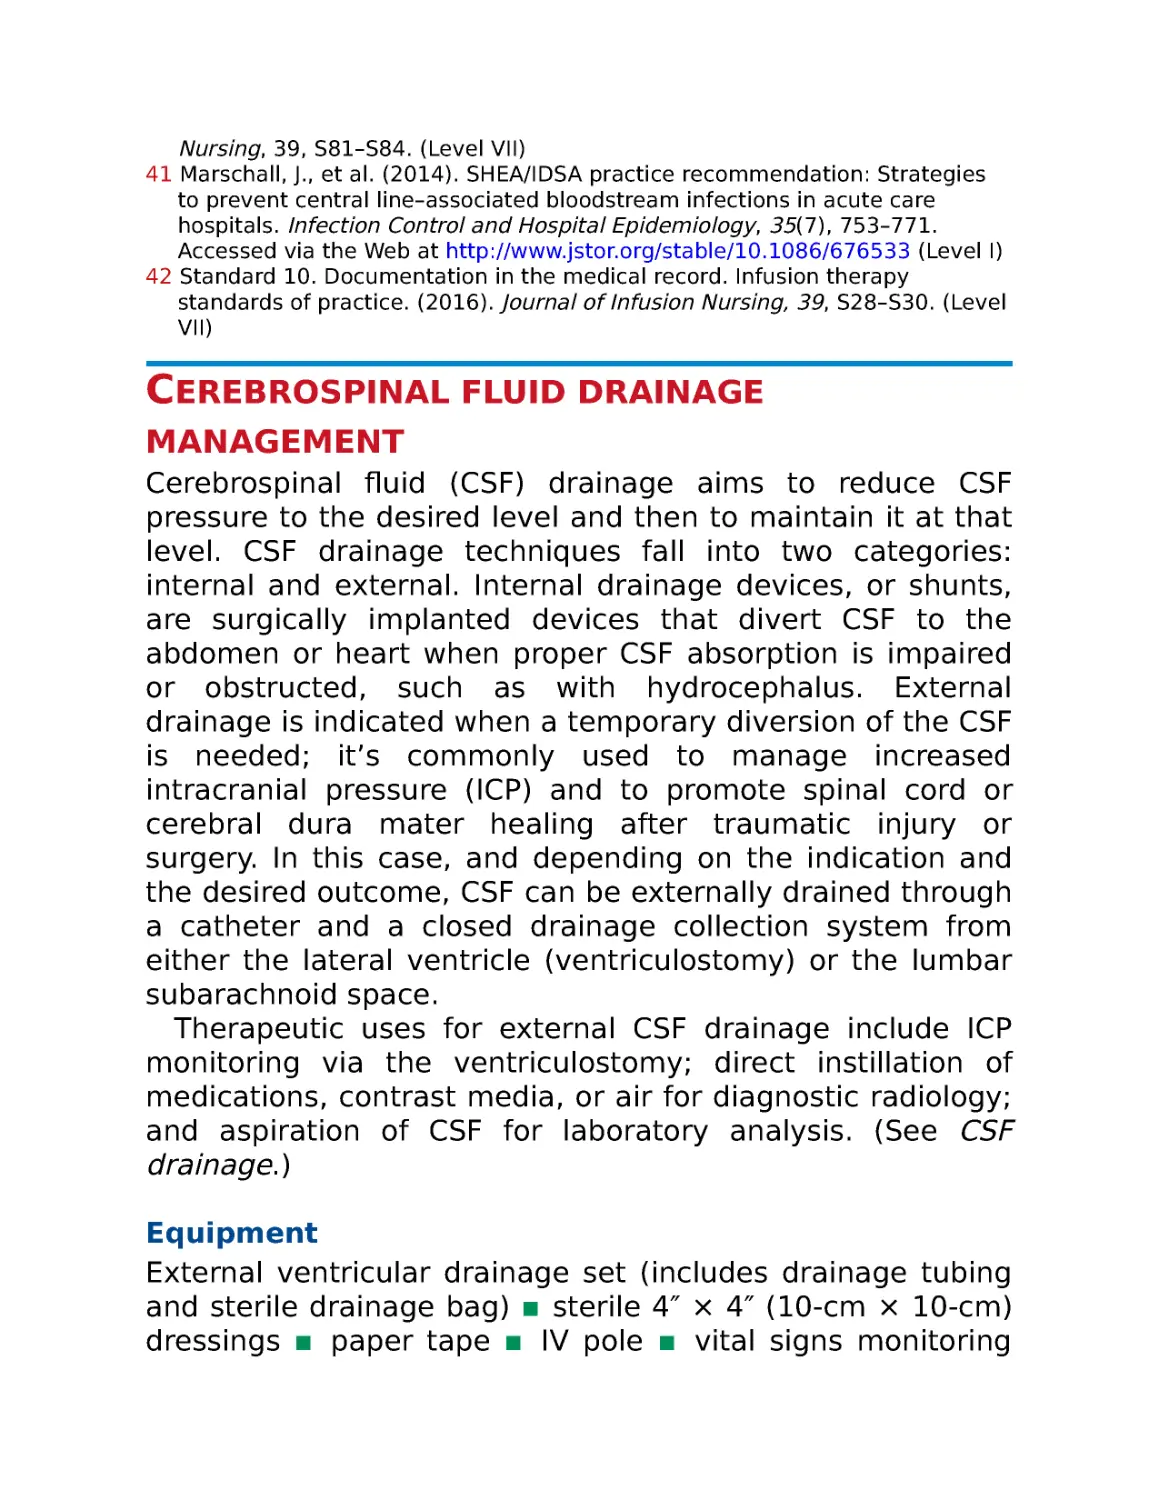 Cerebrospinal fluid drainage management